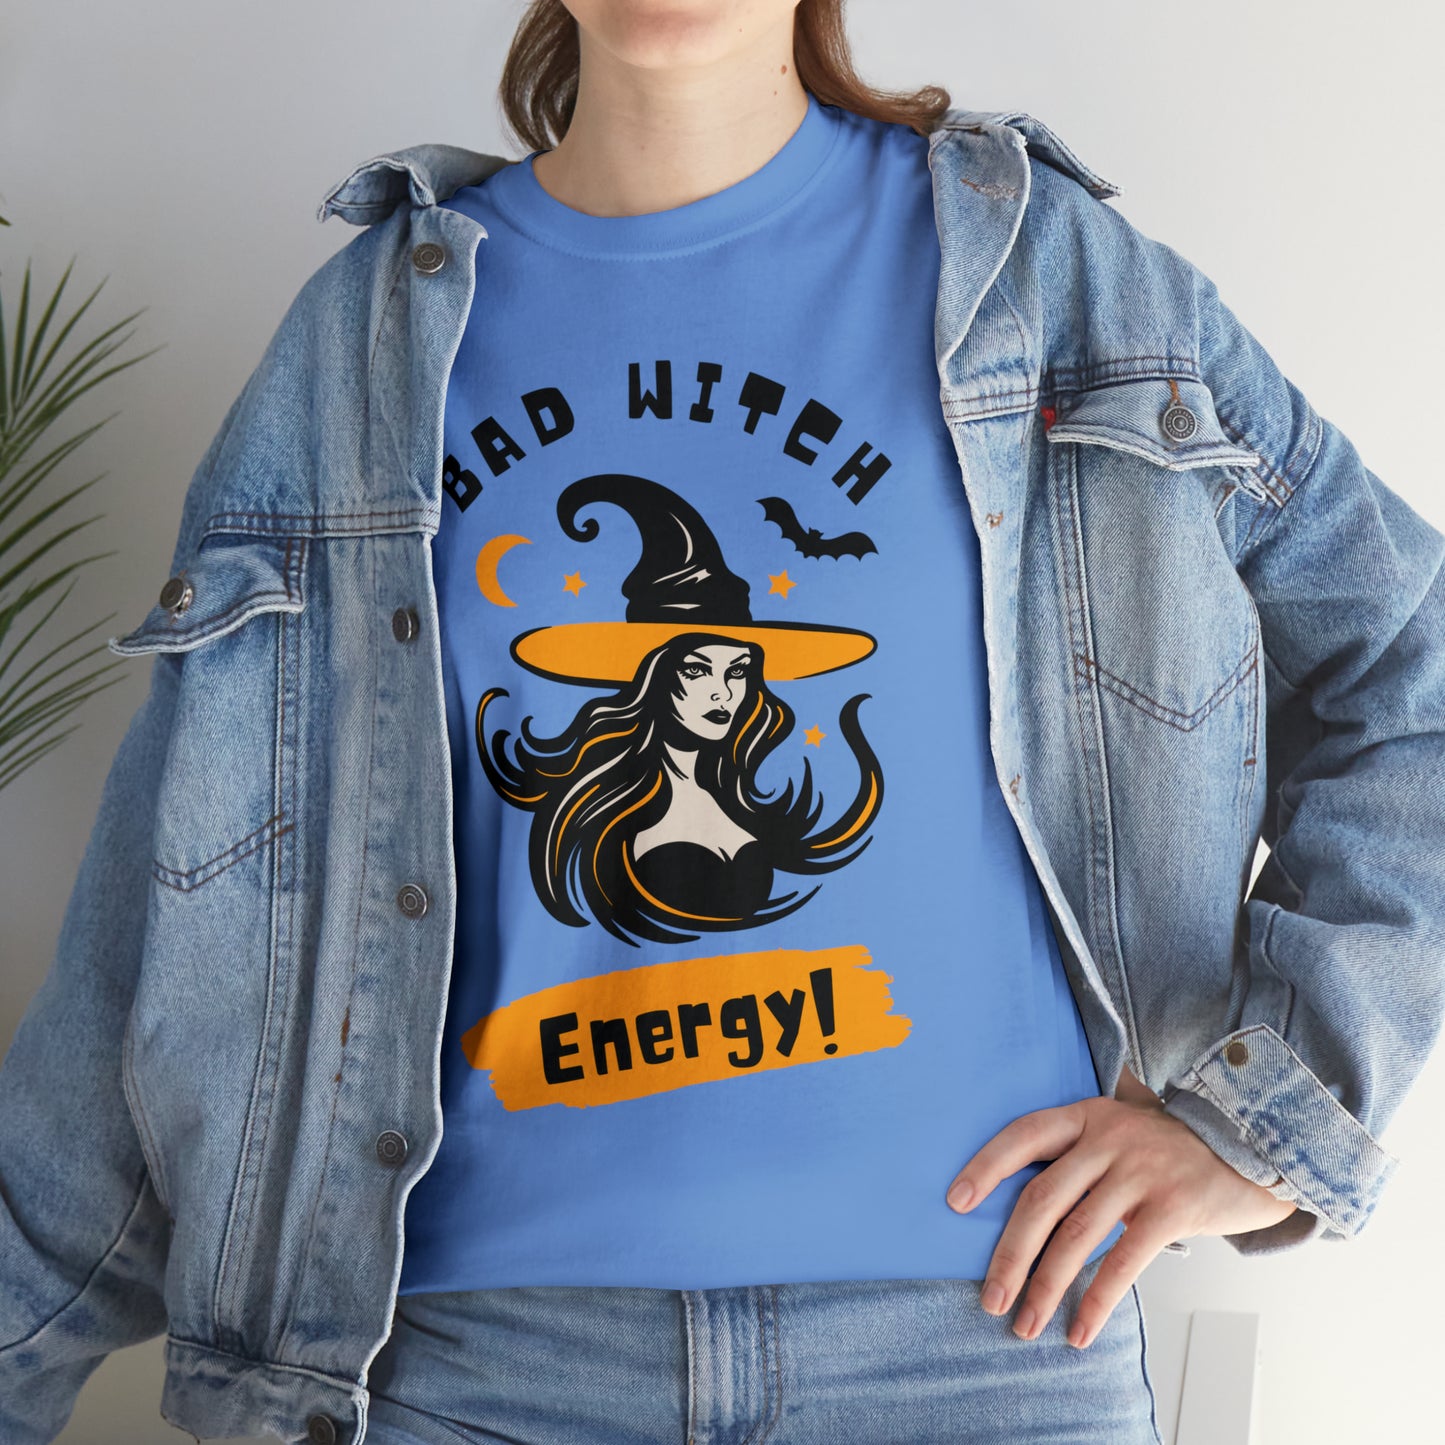 Bad Witch Energy